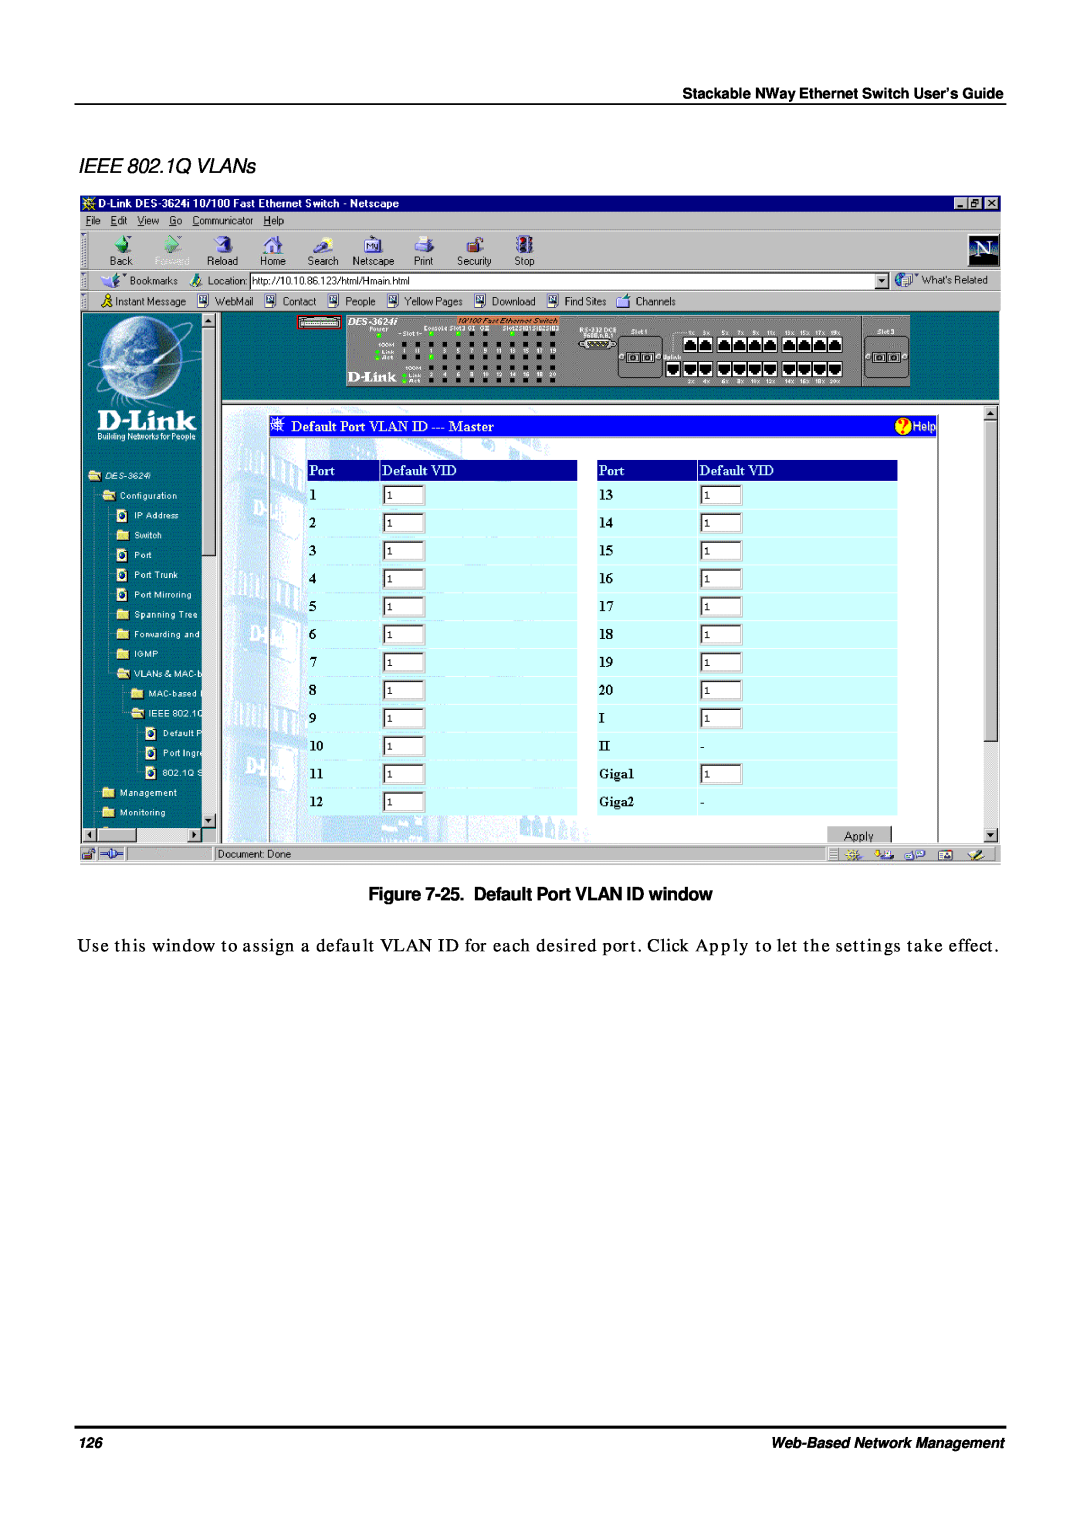 D-Link DES-3624 manual IEEE 802.1Q VLANs, 25. Default Port VLAN ID window, Stackable NWay Ethernet Switch User’s Guide 